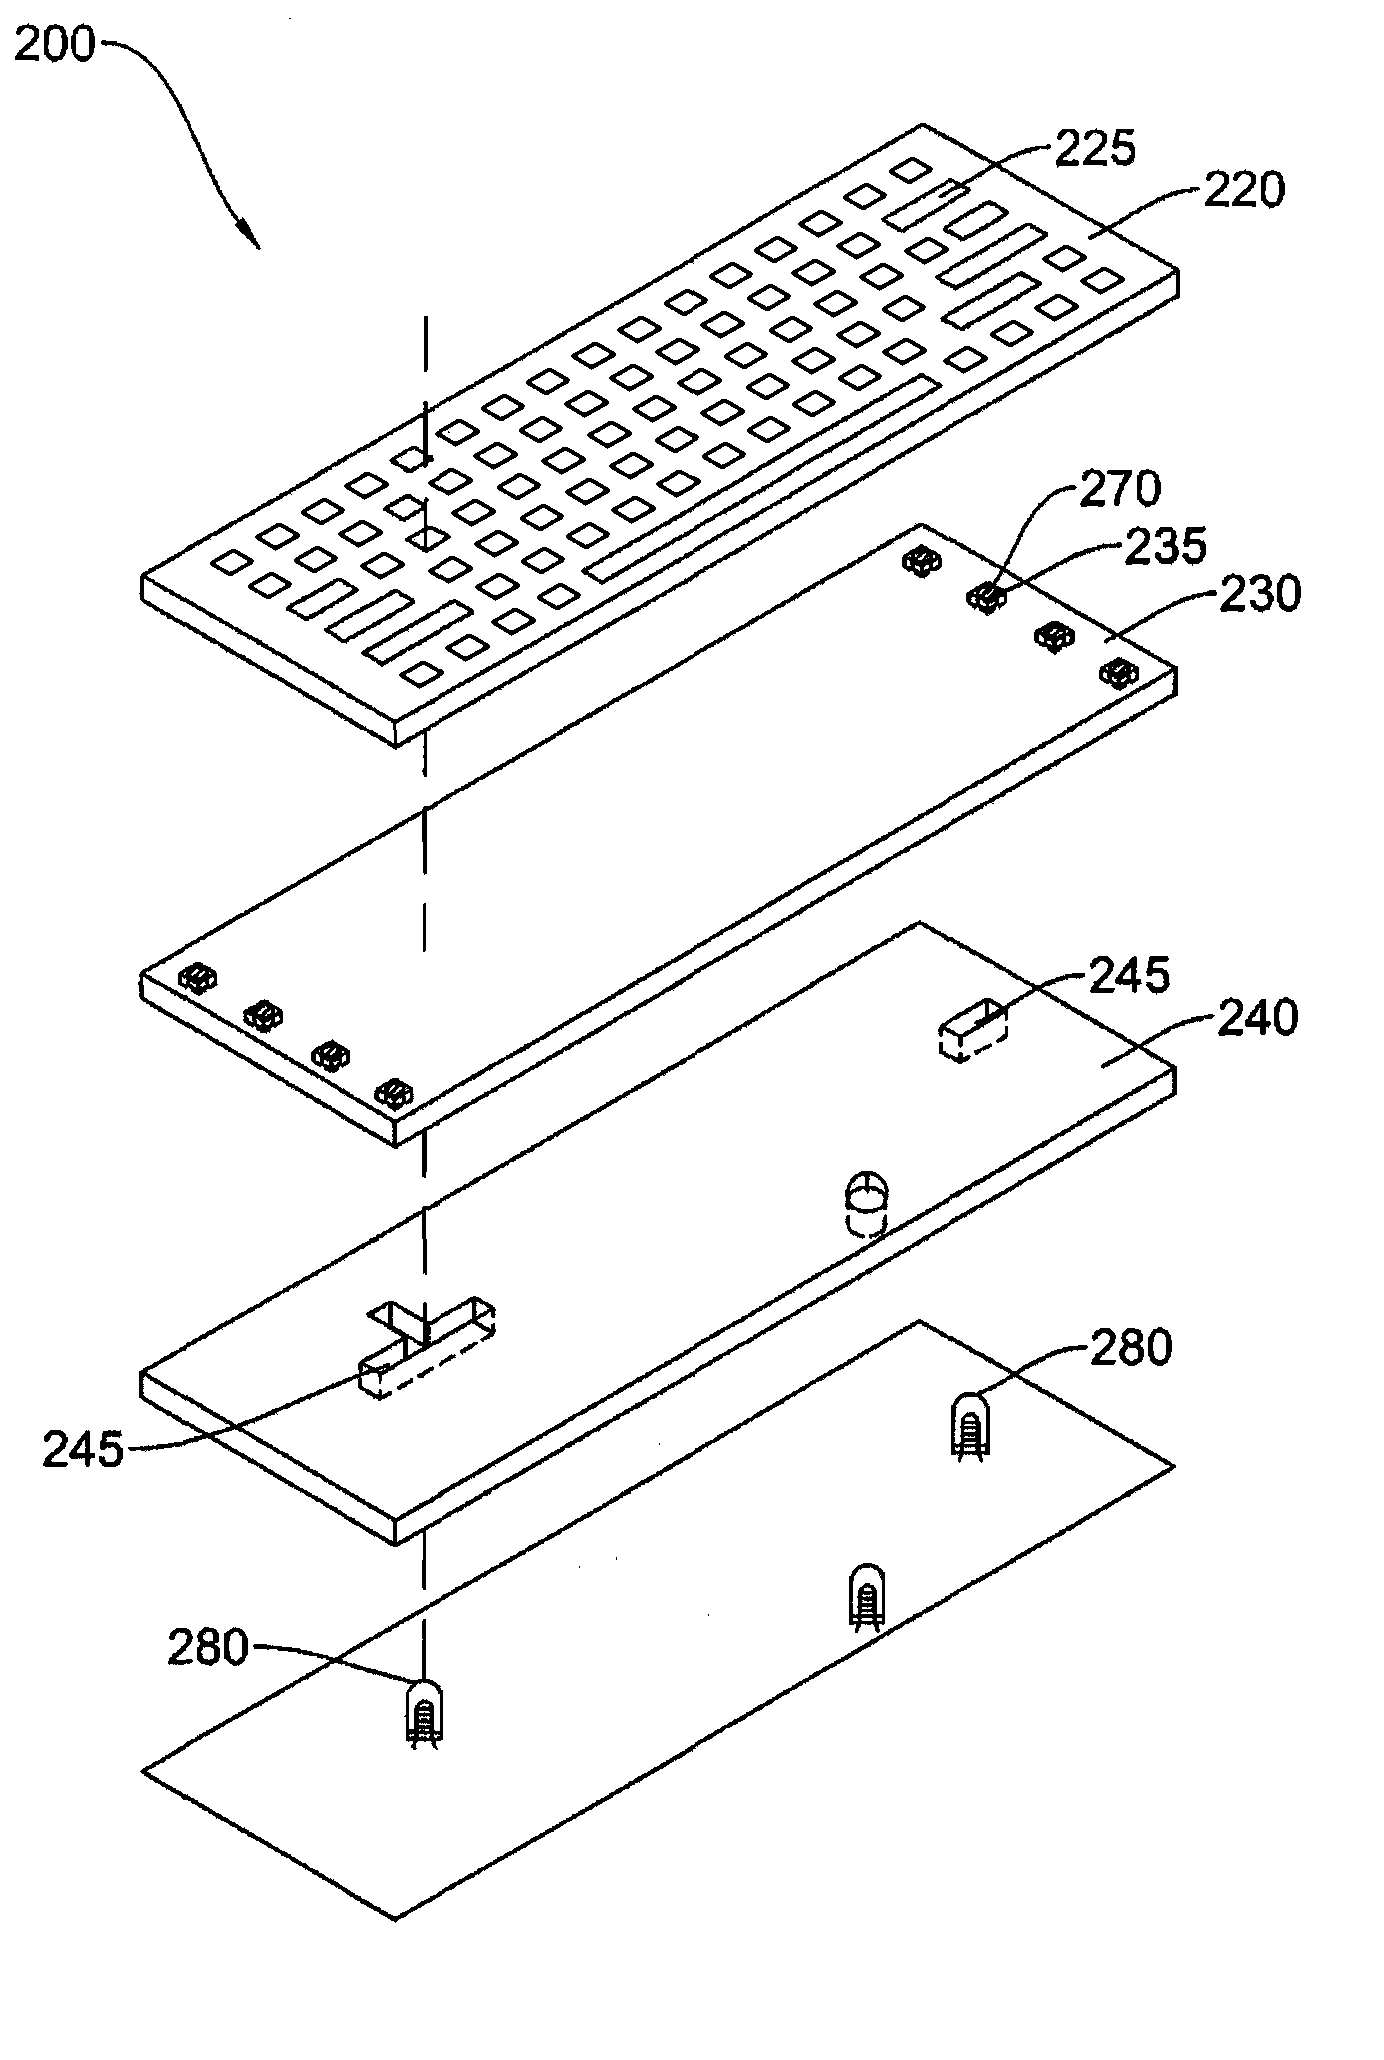 Light-emitting module and keyboard